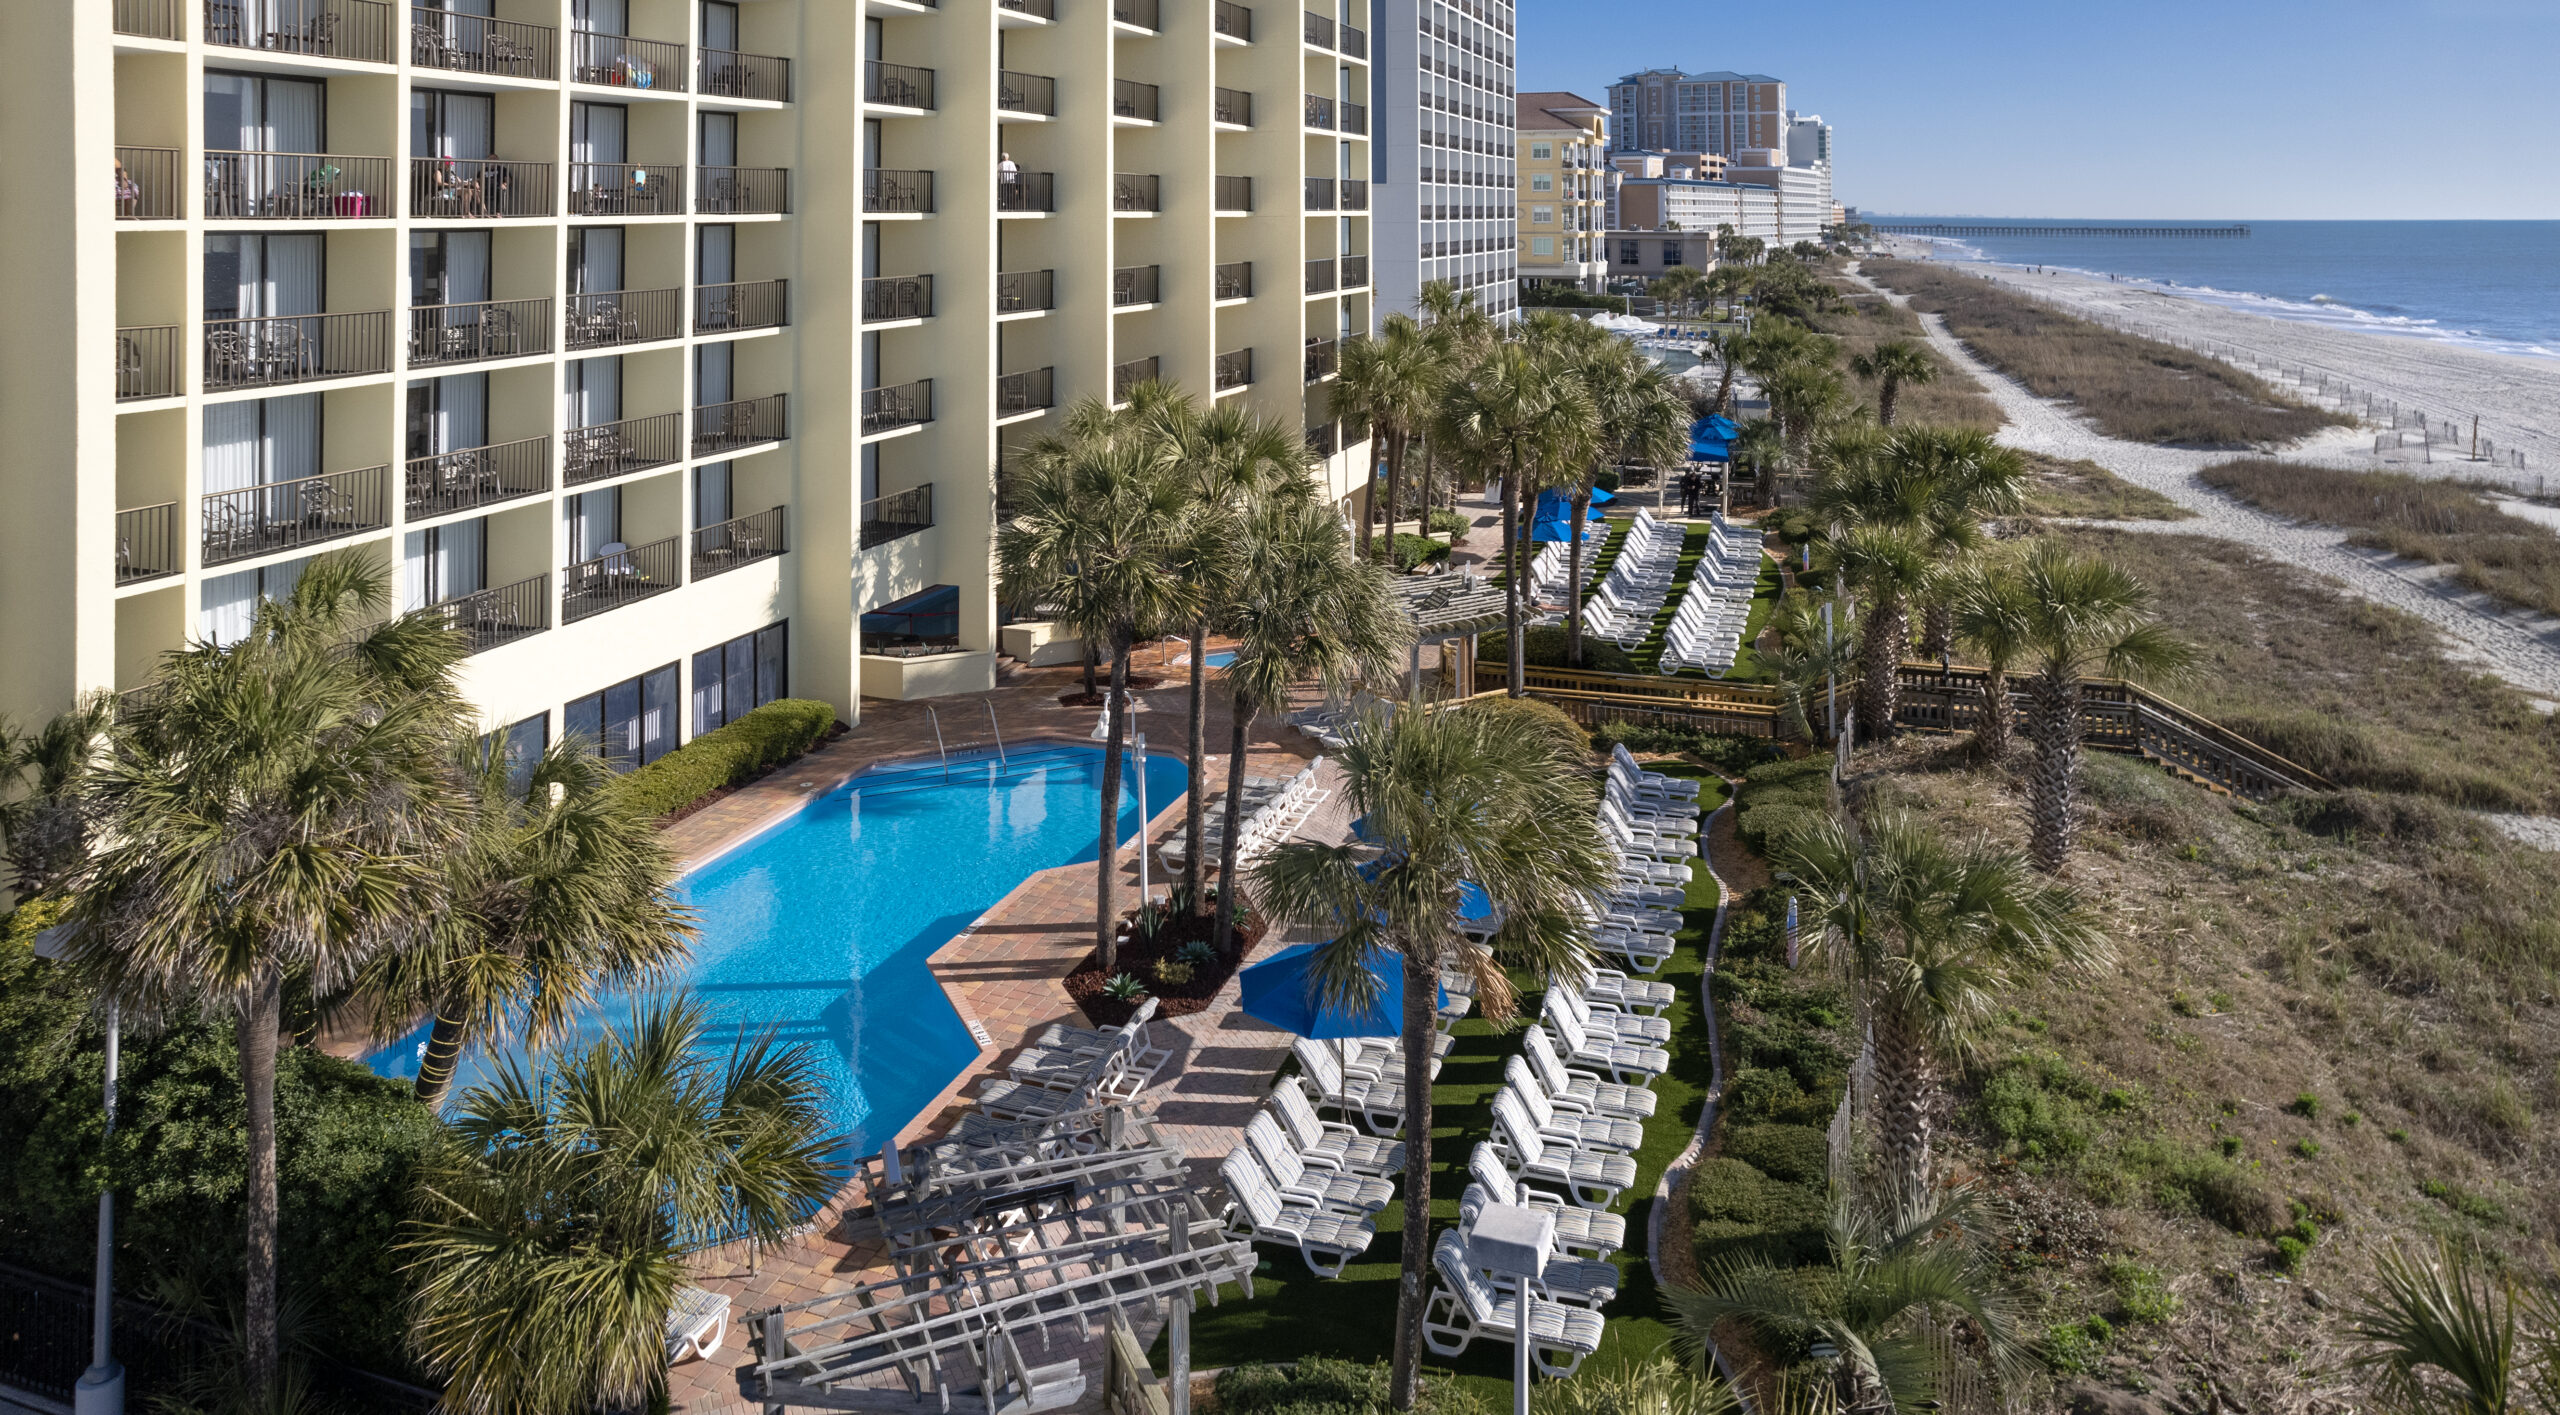 Best Hotels Near the Myrtle Beach Convention Center